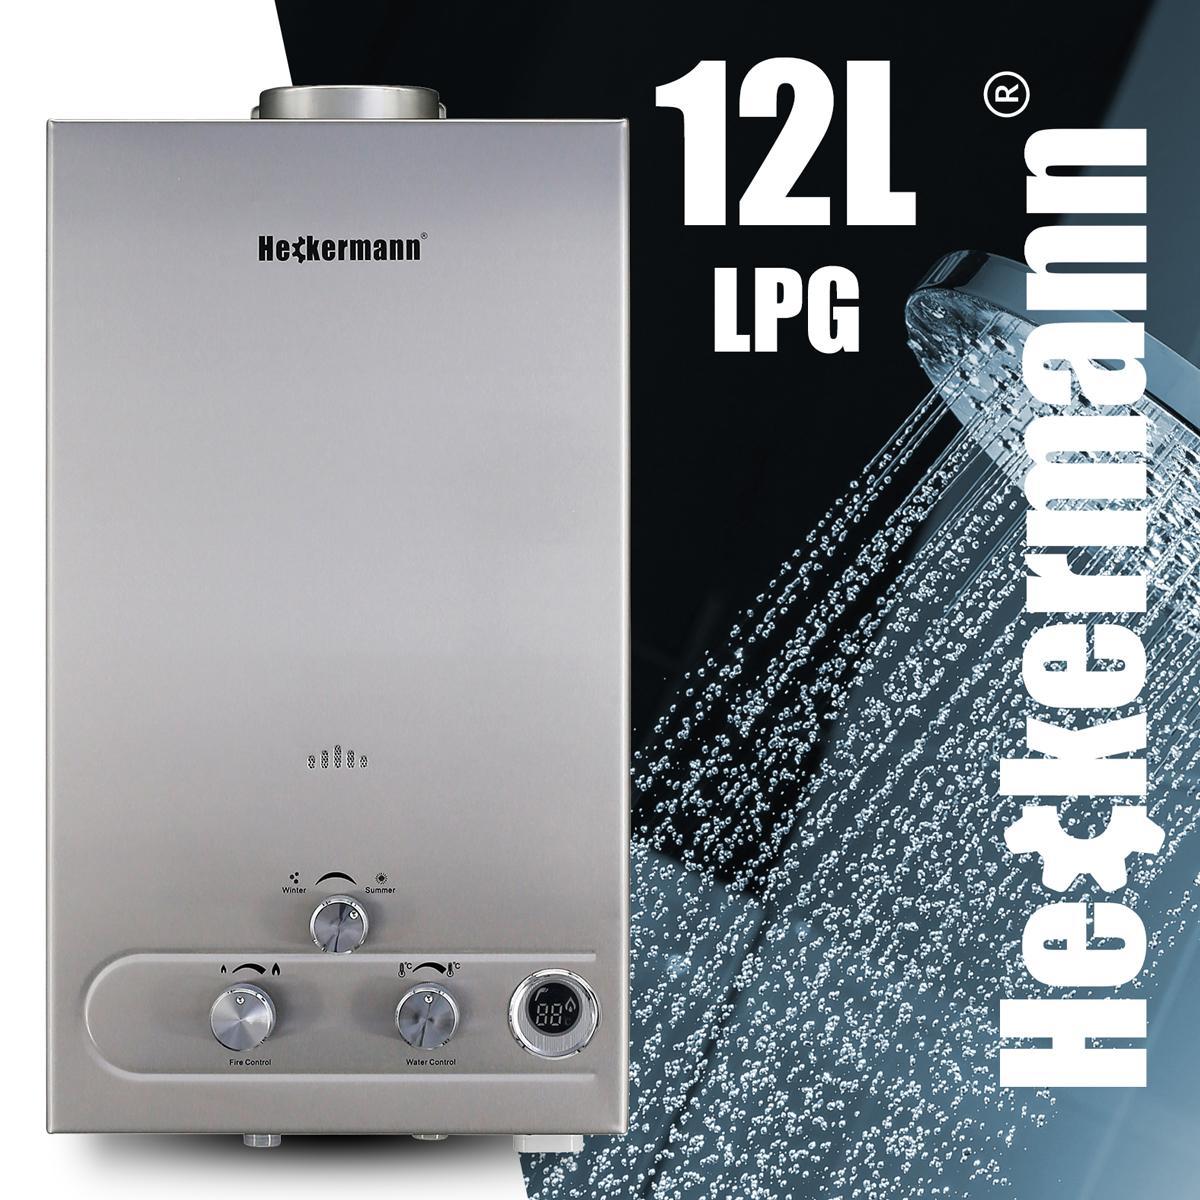 Gazowy podgrzewacz wody Heckermann JSD-HB02 12L LPG 7 Full Screen